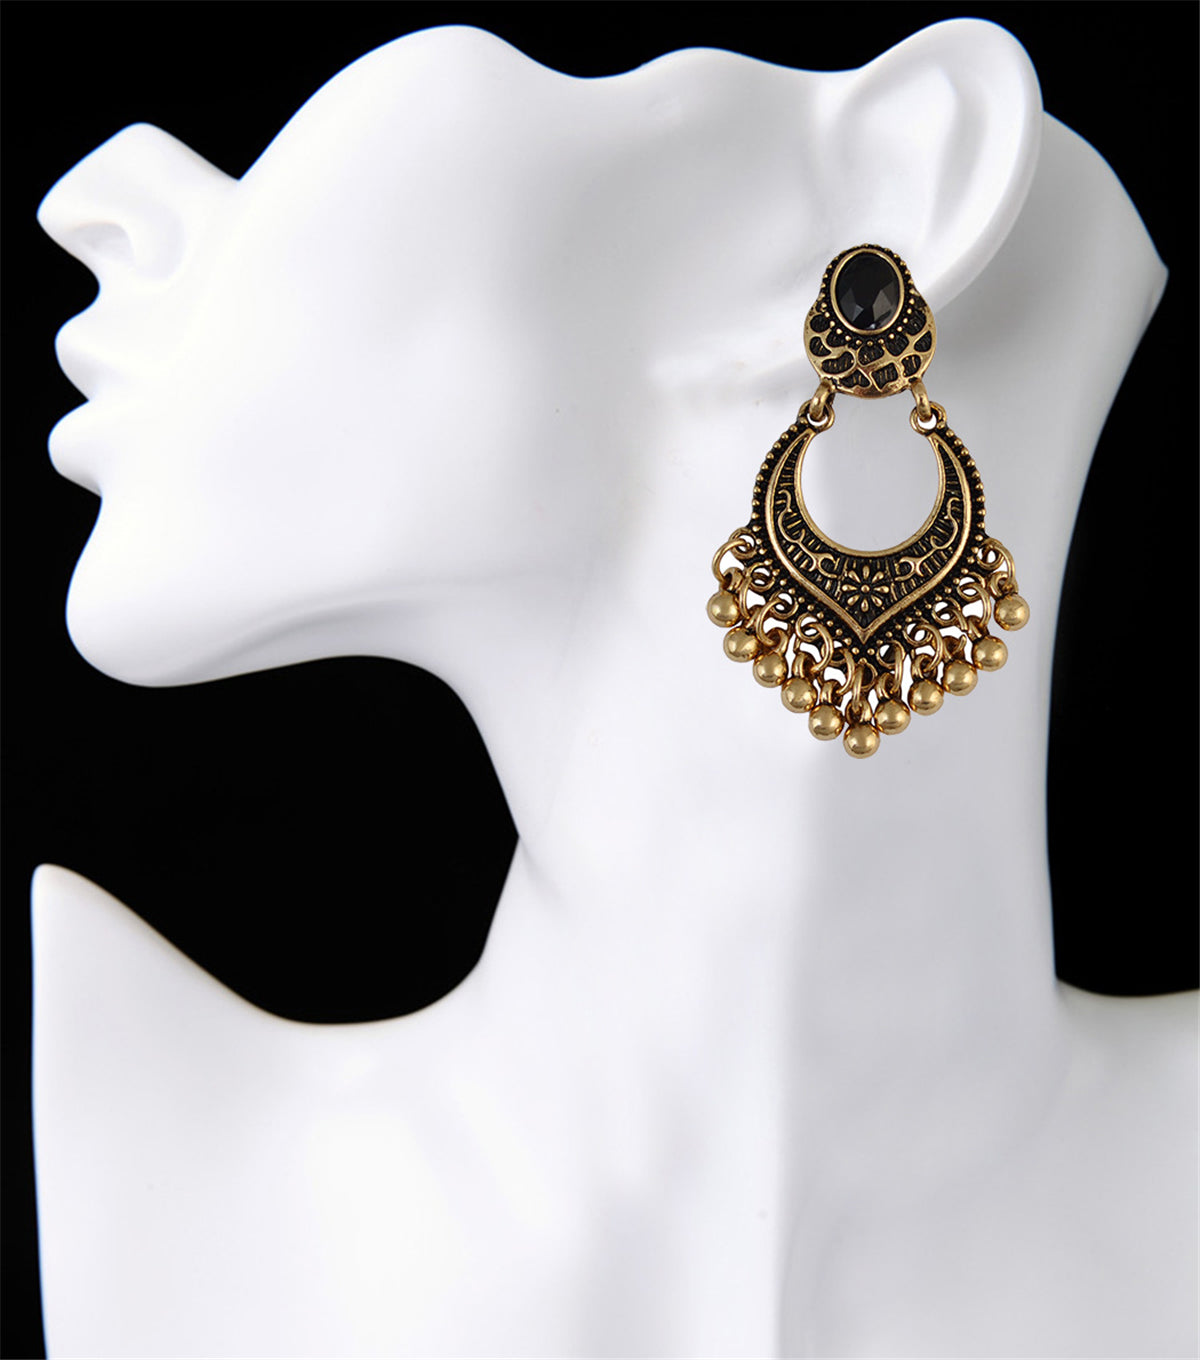 18K Gold-Plated & Black Resin Bell-Tassel Drop Earrings